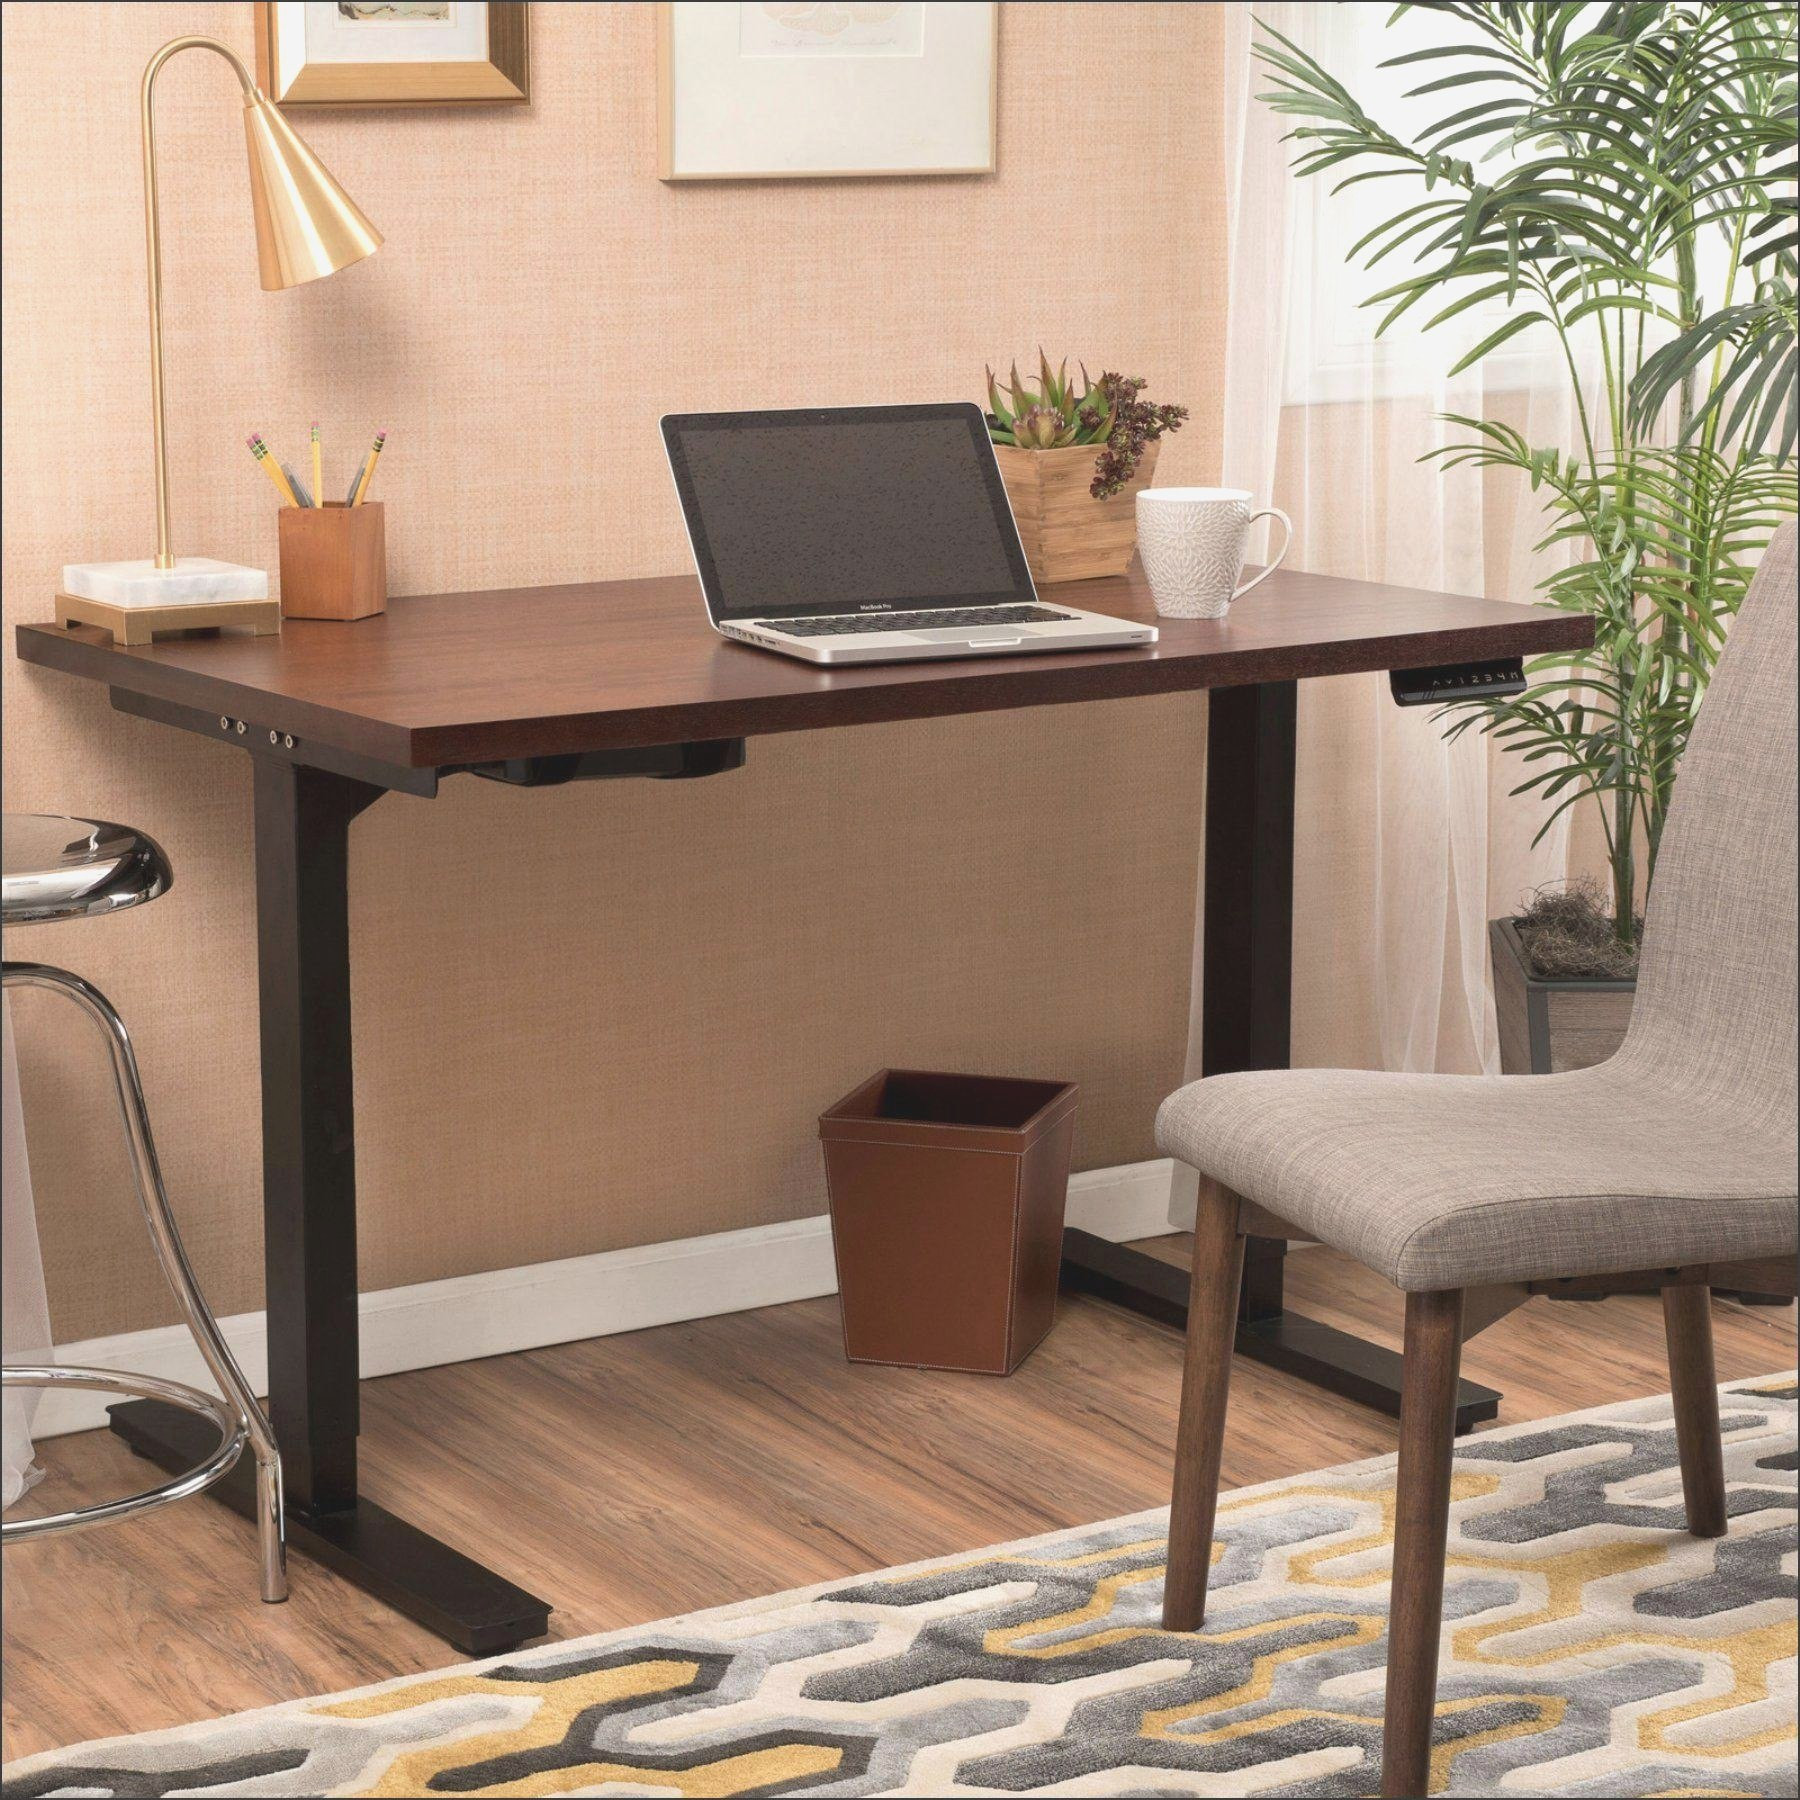 refined hardwood flooring wilmington nc of sitemap wooden desk ideas for puter desk for corner